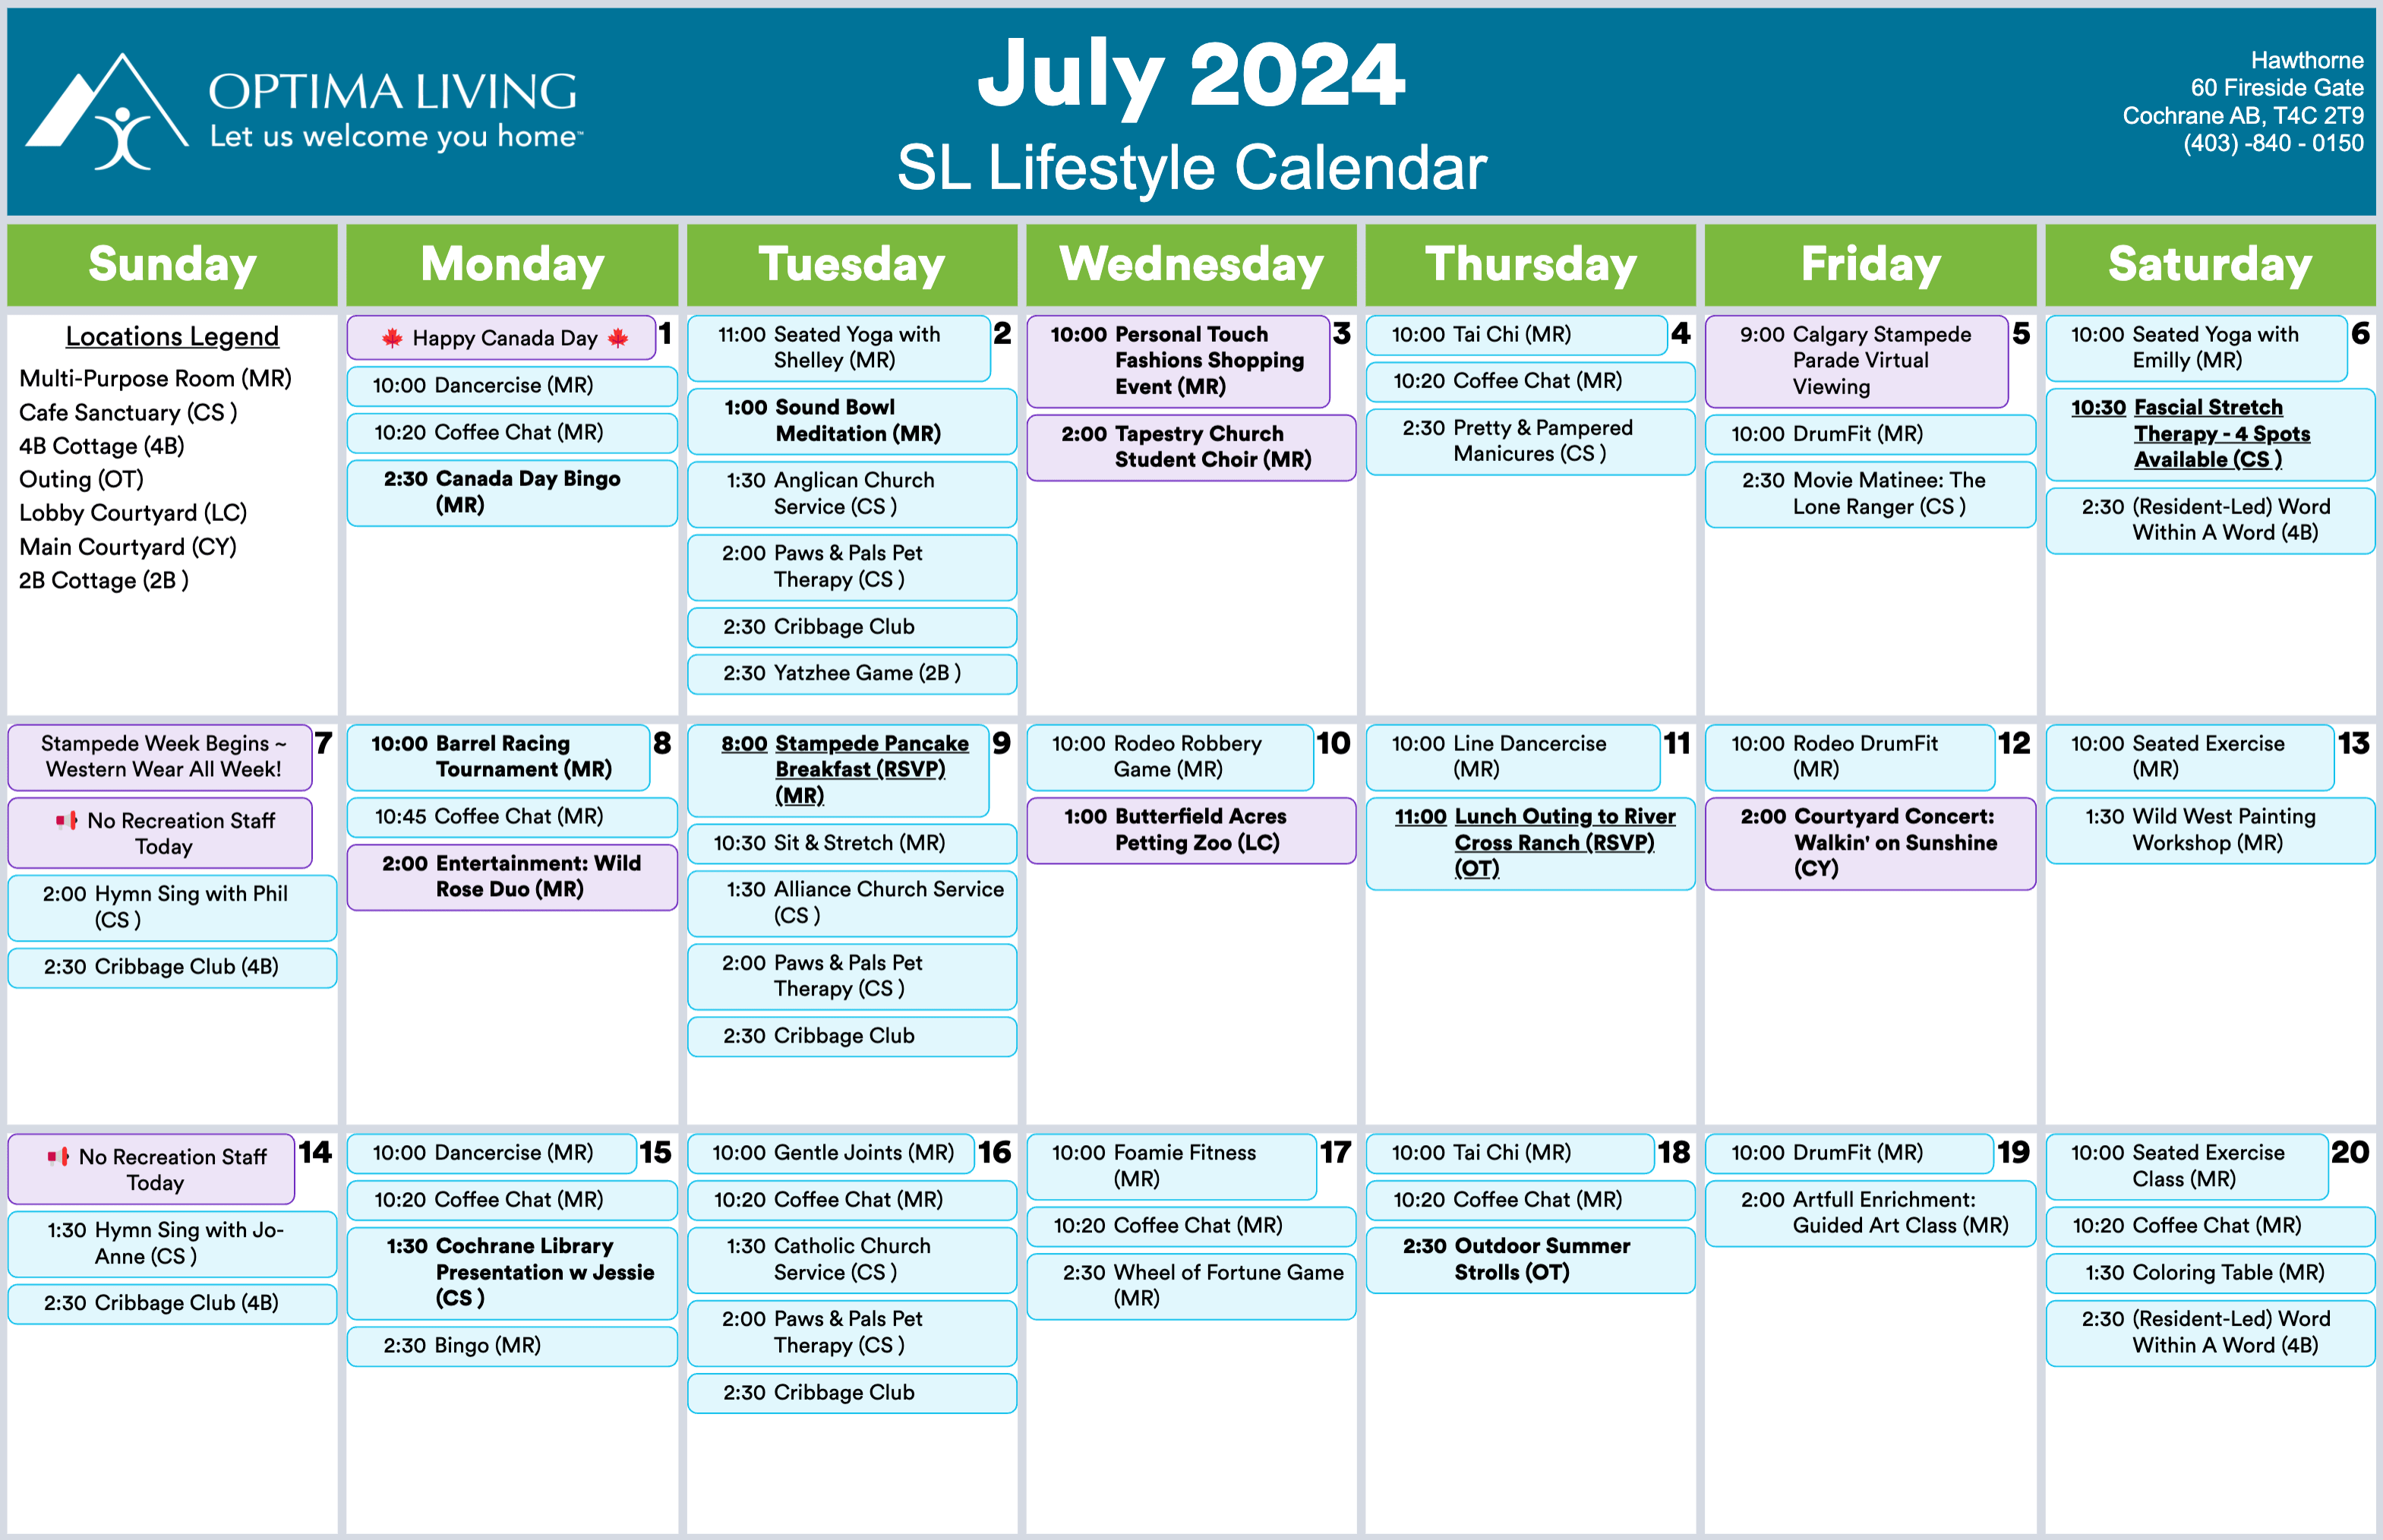 Hawthorne July 1 - 20 2024 Supportive Living event calendar